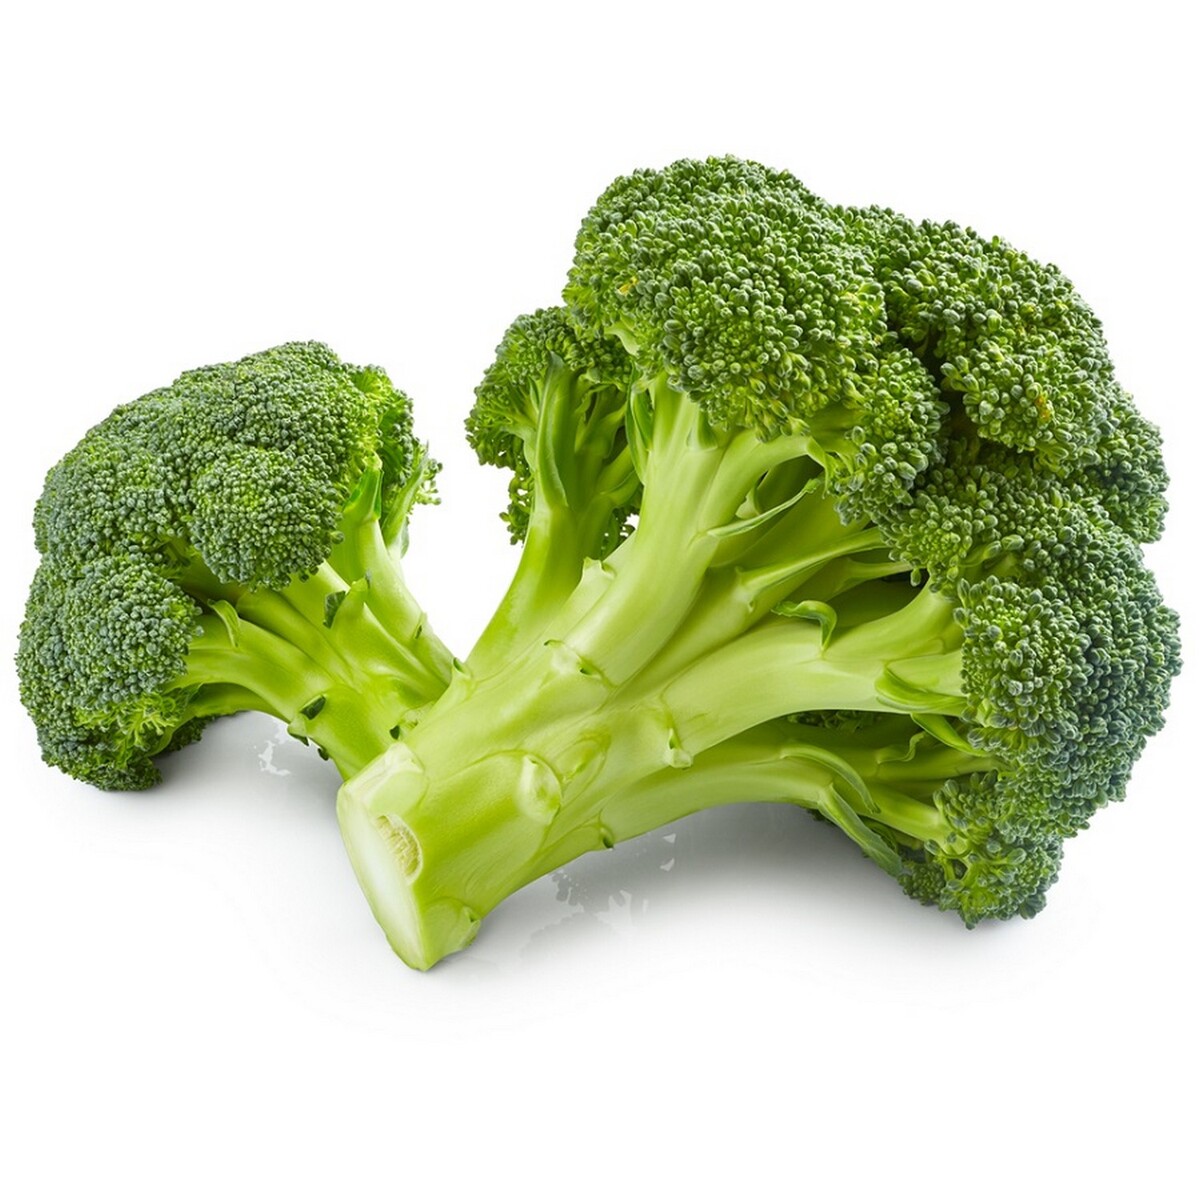 Broccoli Approx. 450gm to 500gm